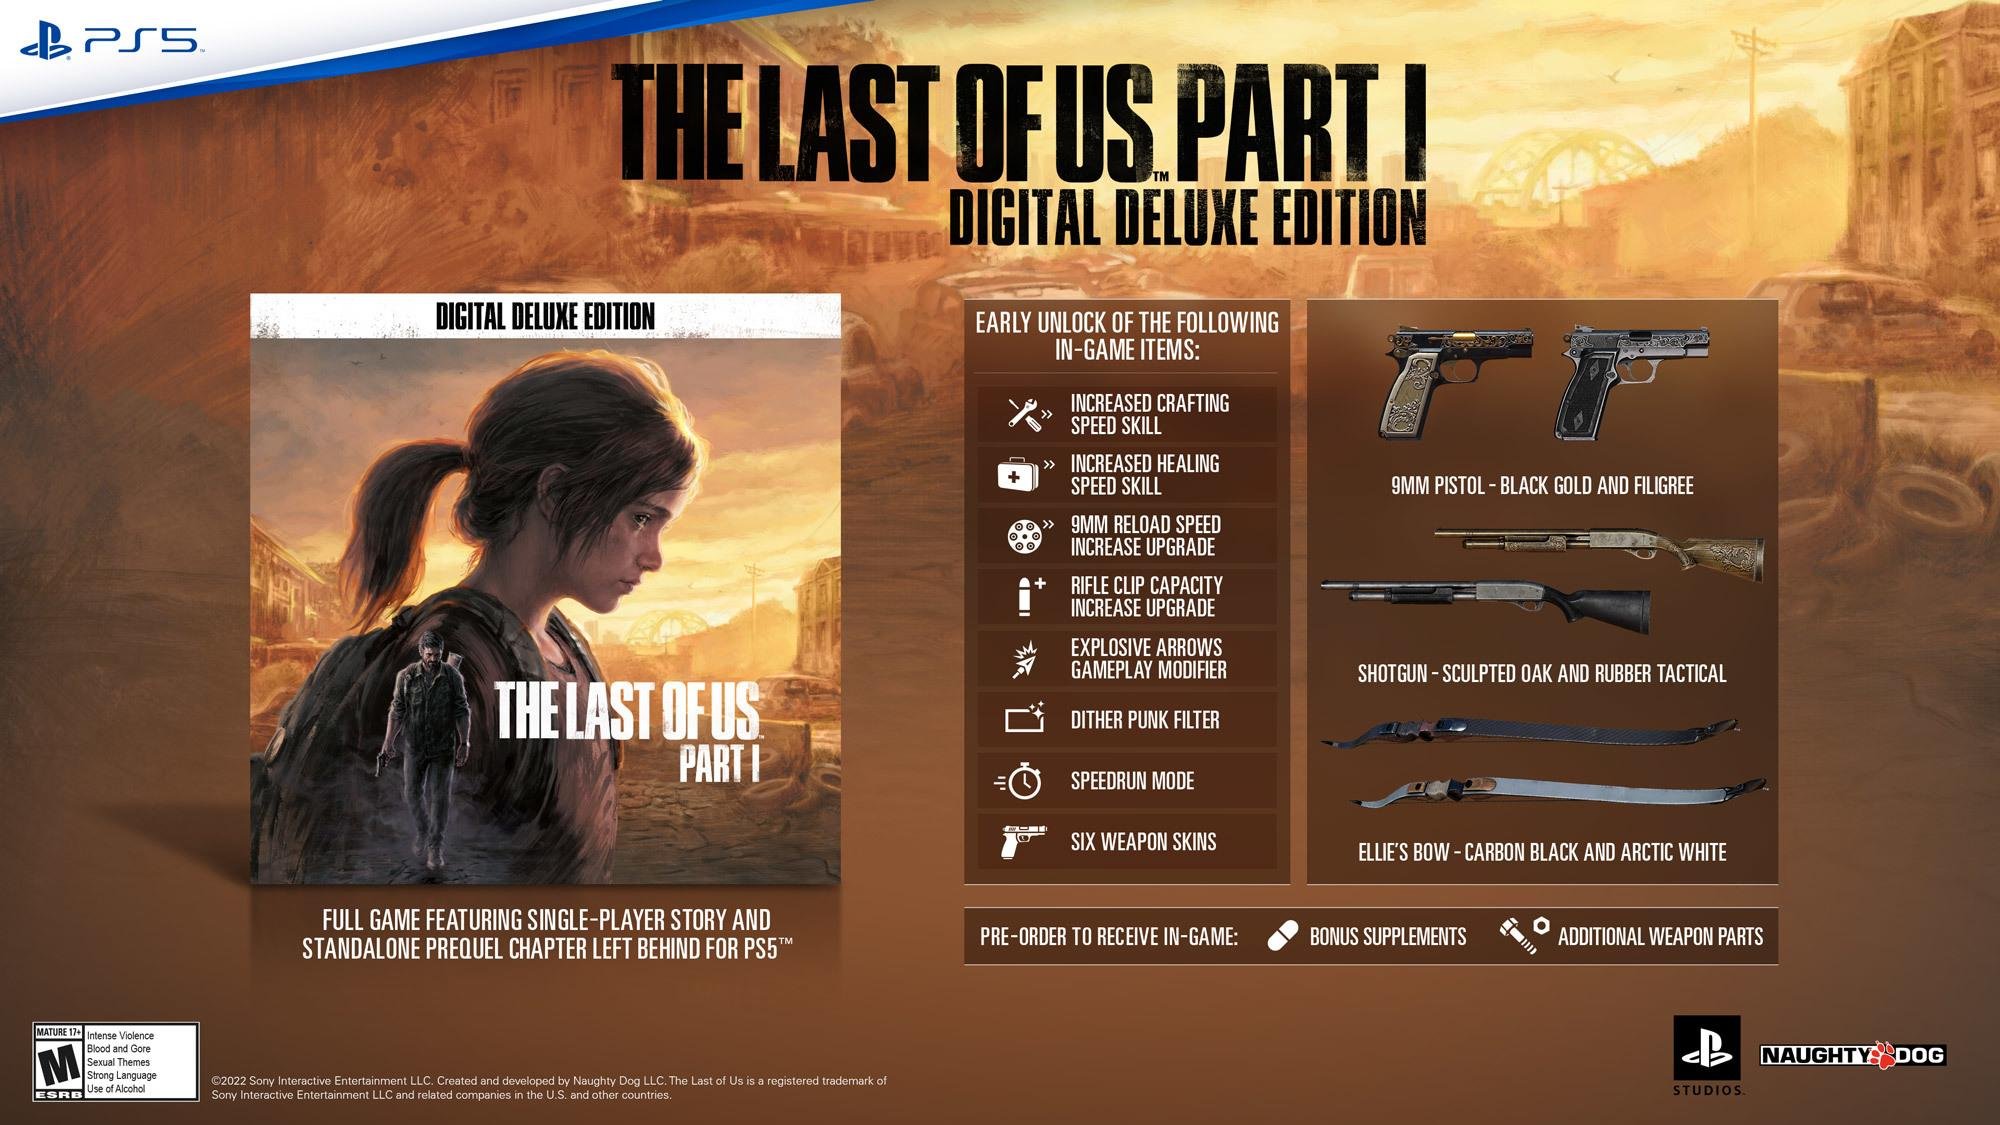 The Last of Us Parte II Remastered já disponível em pré-venda - Adrenaline